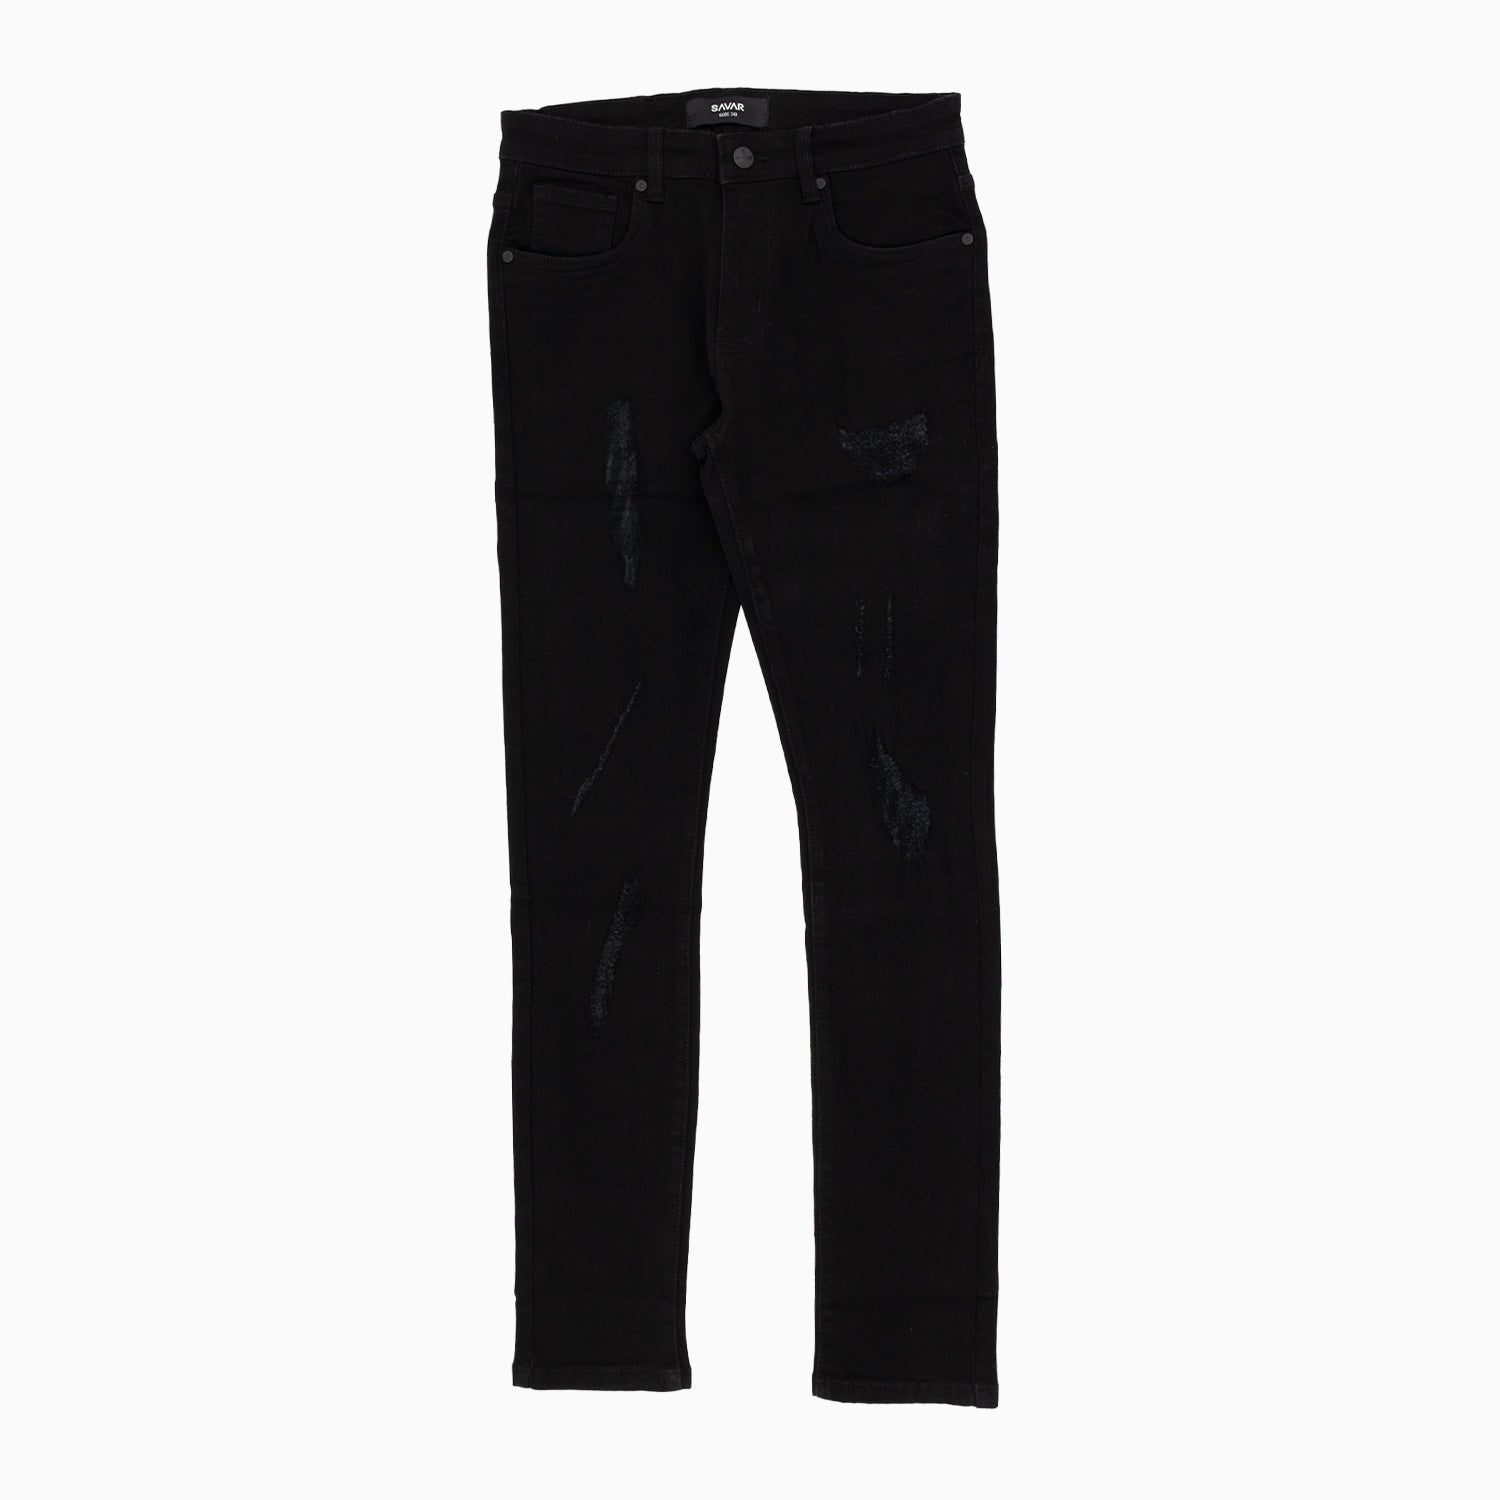 Men's Savar Jet Black Slim Denim Ripped Jeans Pant-sjr0100-jetblk